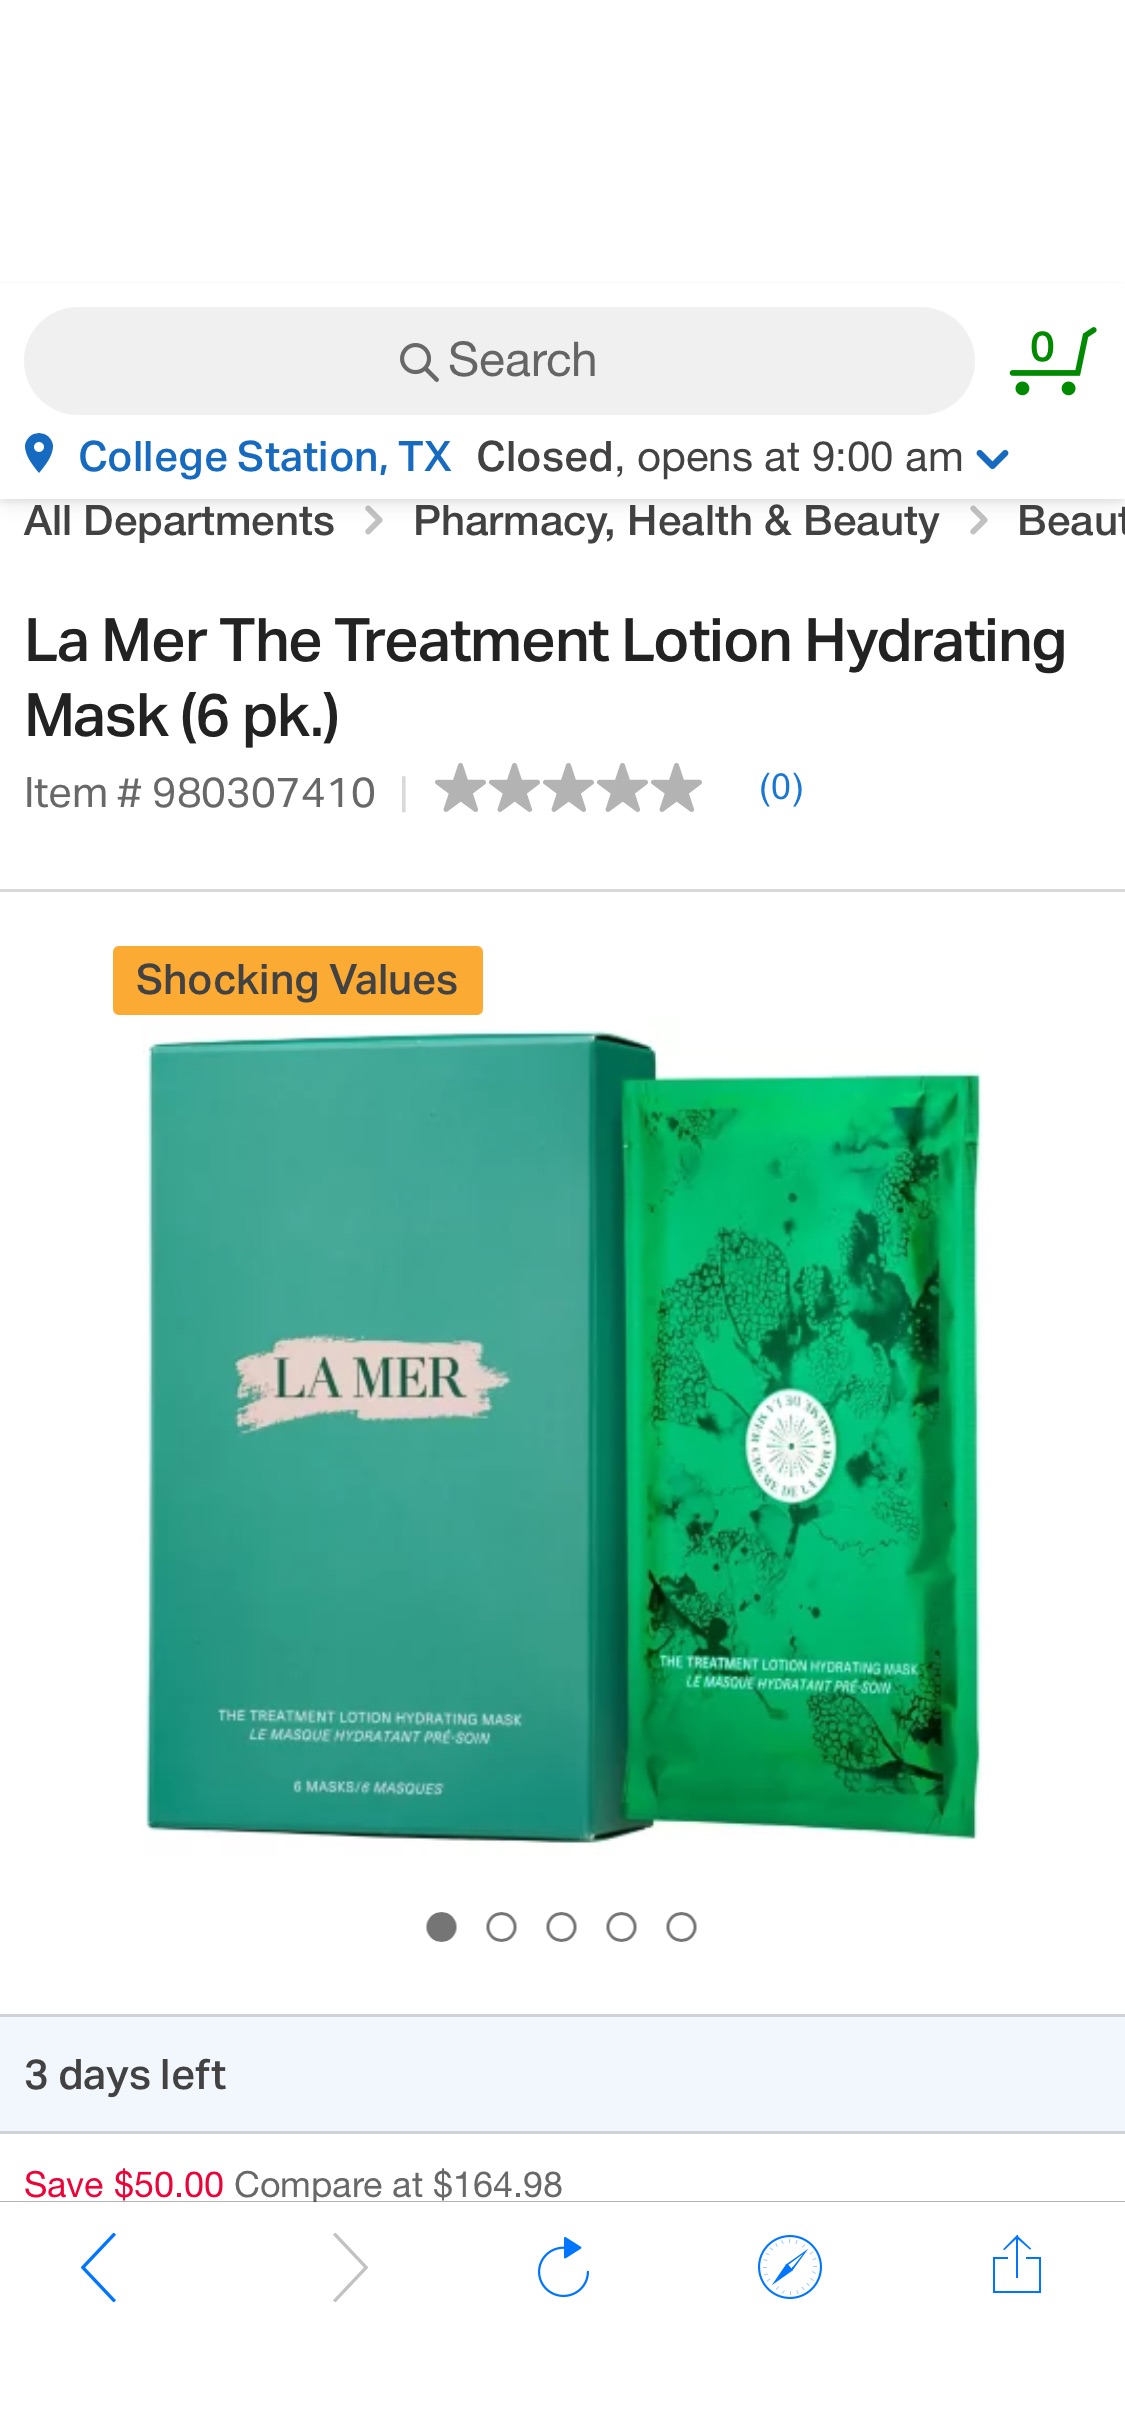 La Mer The Treatment Lotion Hydrating Mask (6 pk.) 海蓝之谜面膜